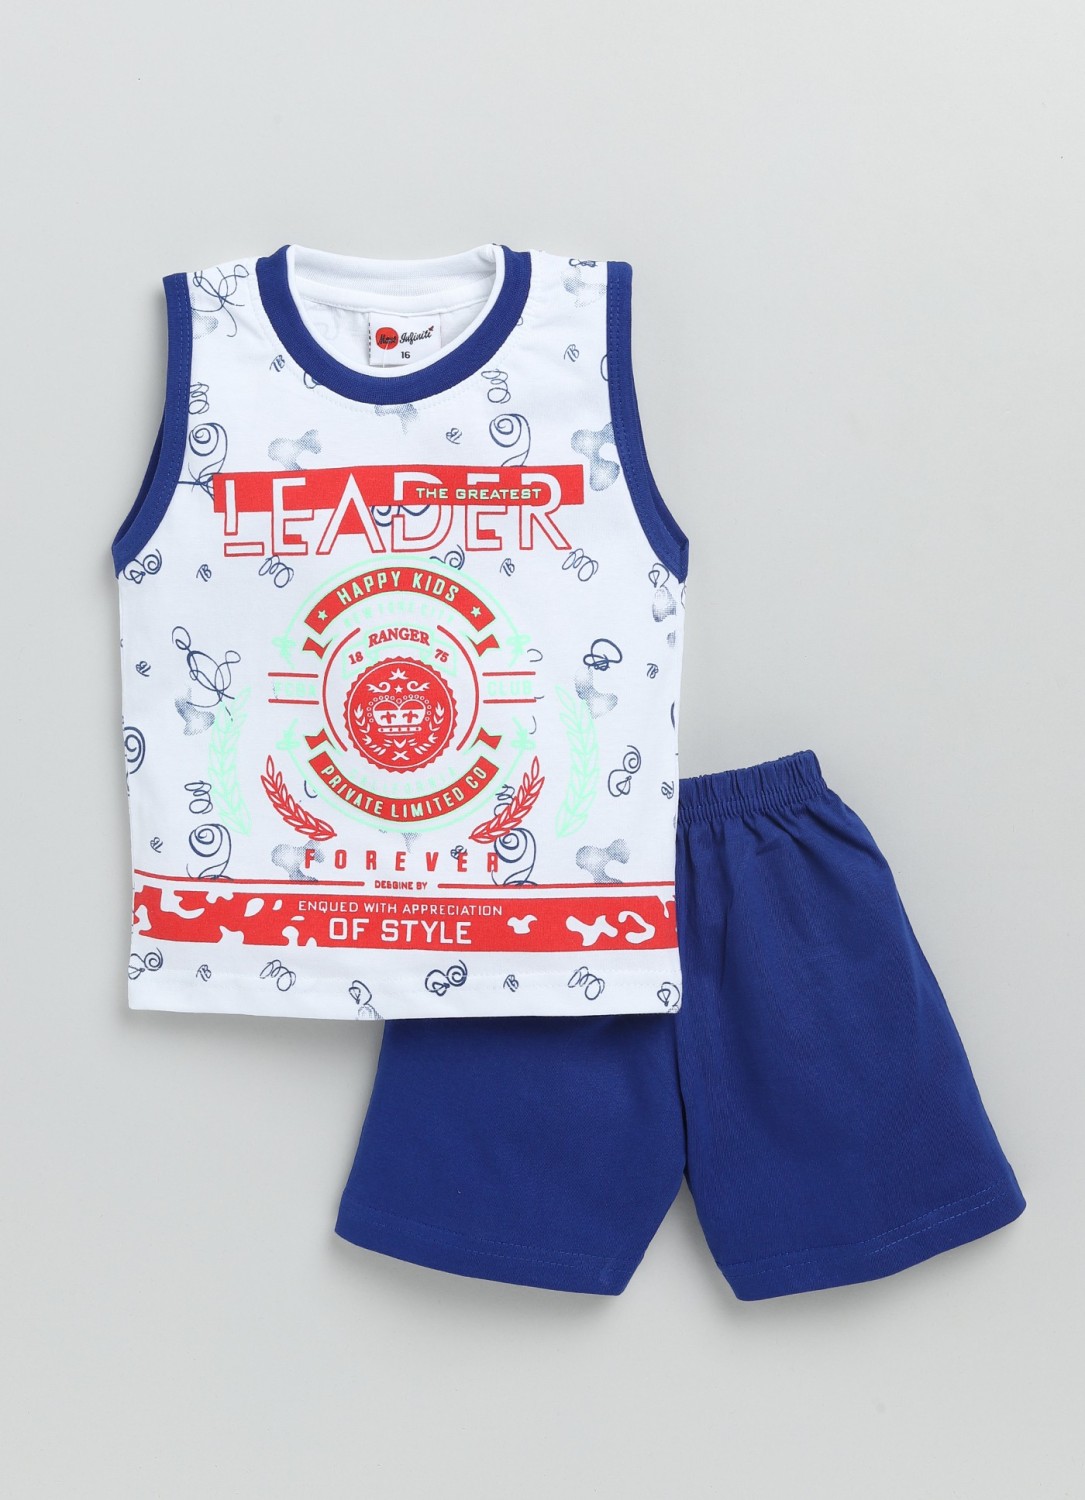 Buy Mars Infiniti Casual T-shirt Shorts for Boys & Girls